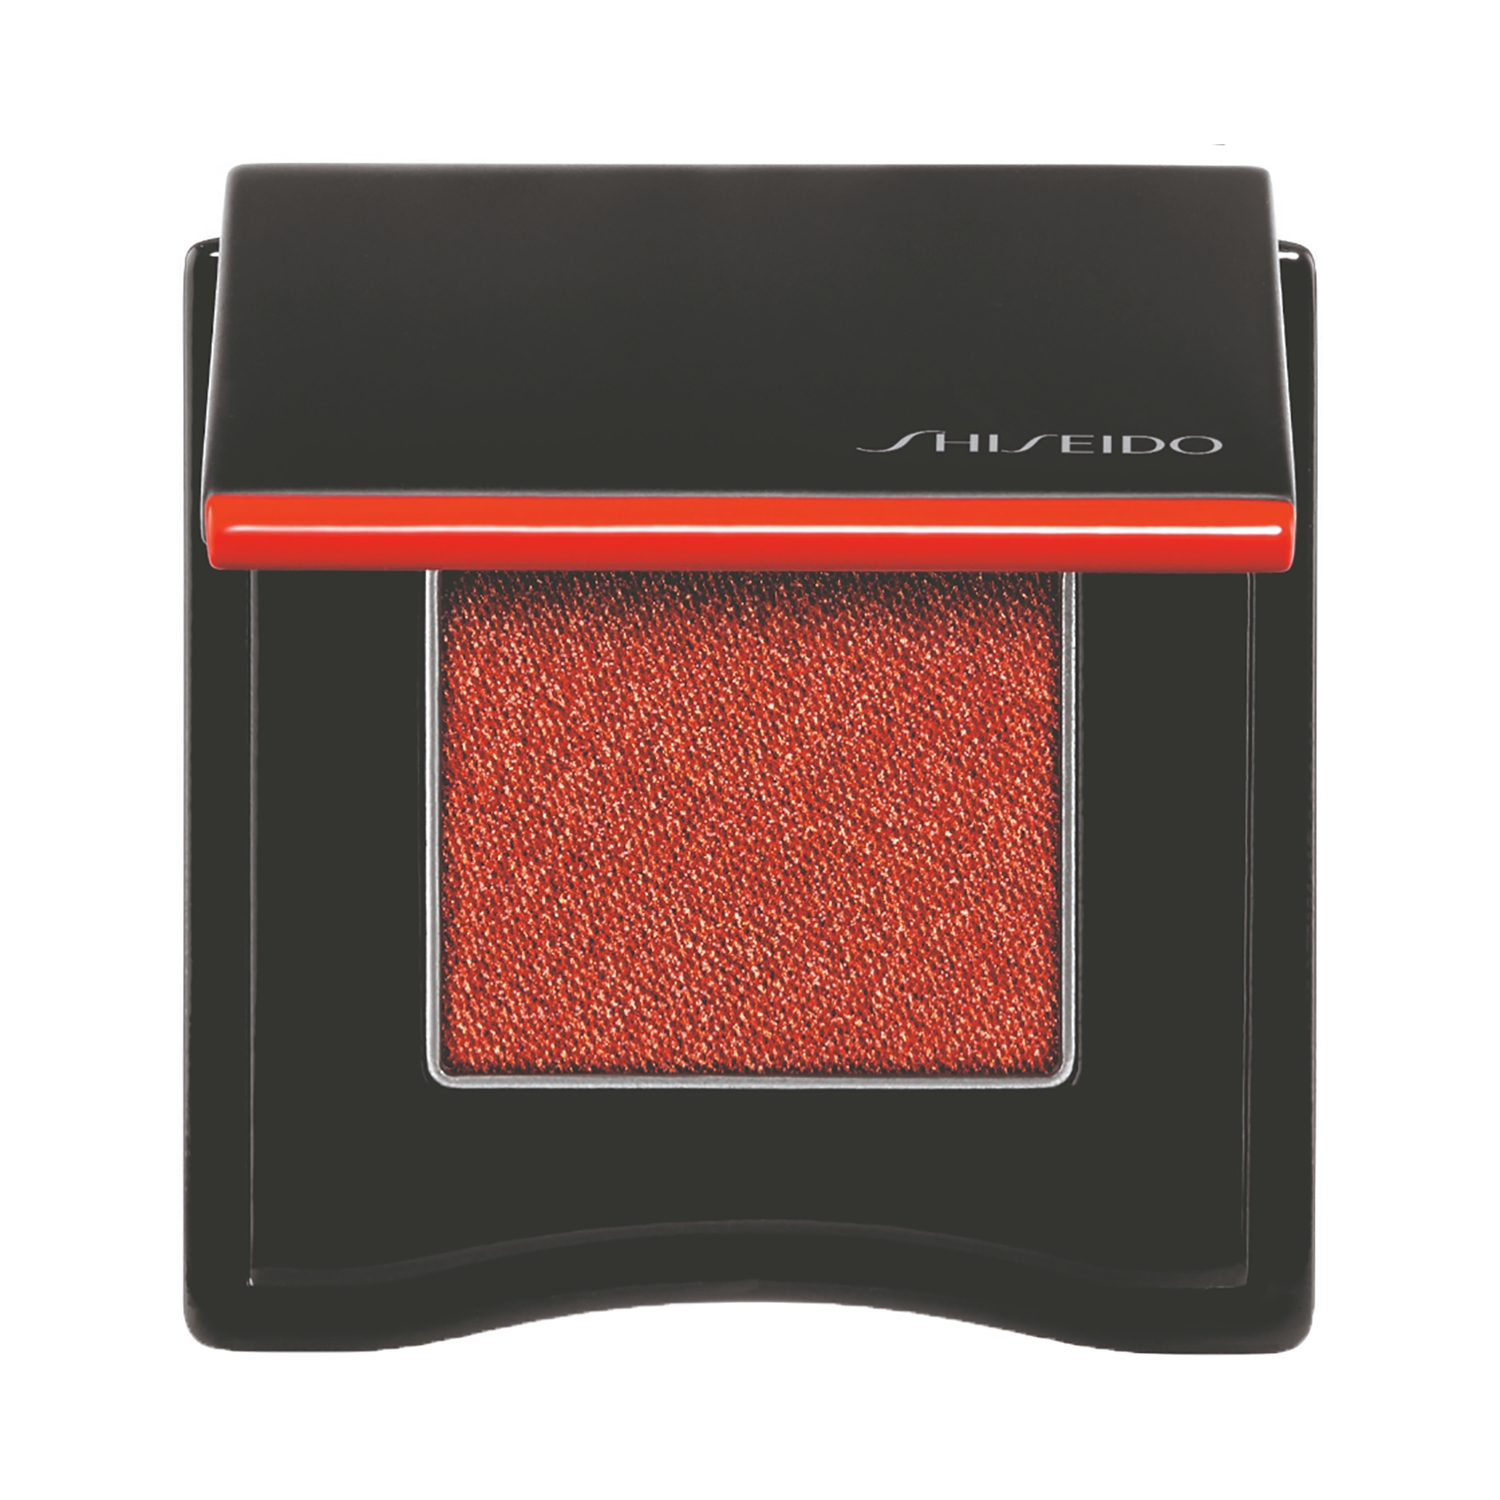 Shiseido | Shiseido Pop Powdergel Eye Shadow - 06 Vivivi Orange (2.2g)